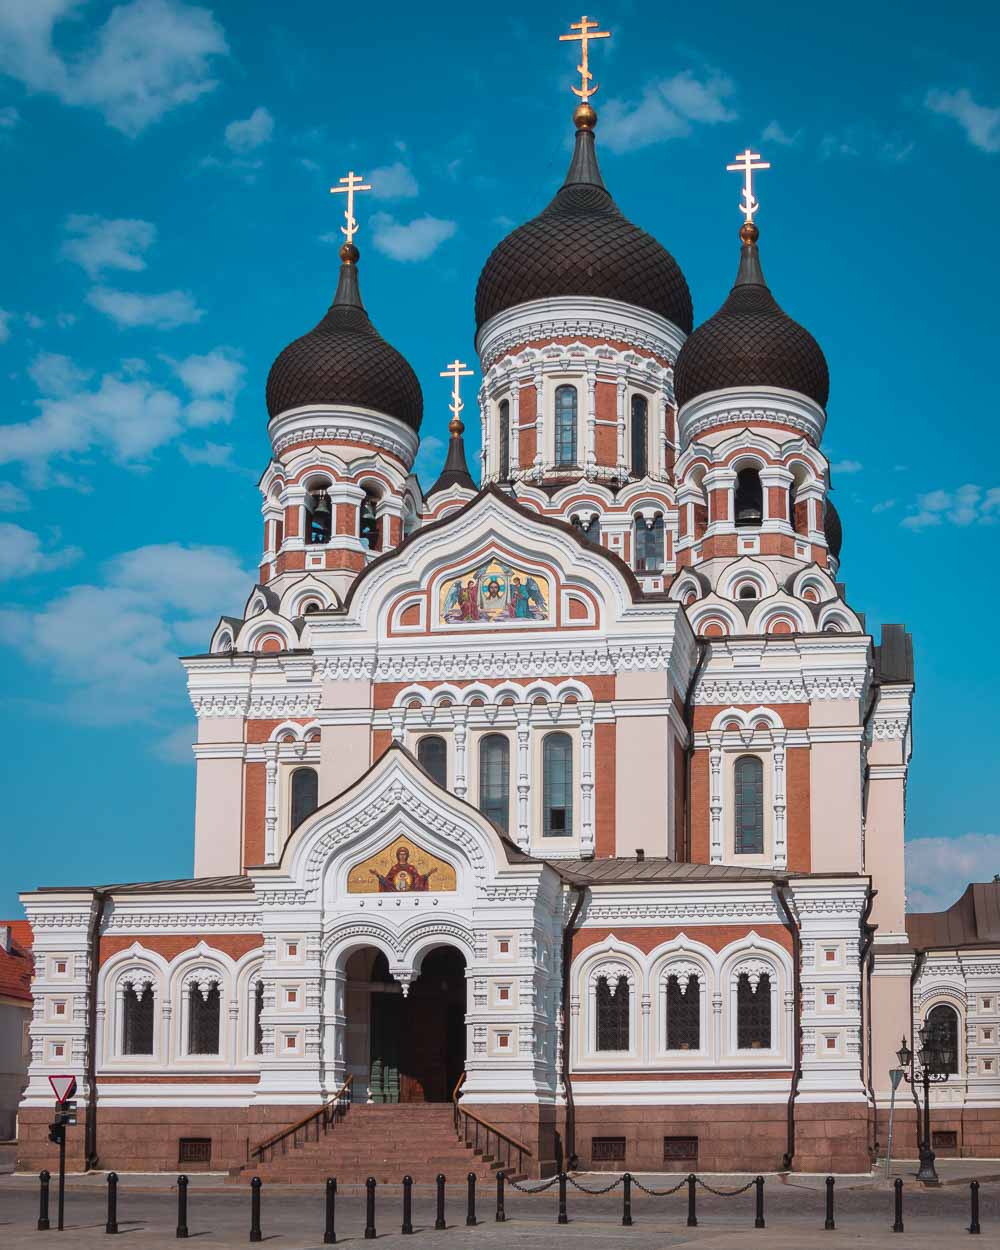 Alexander-Newski-Kathedrale in Tallinn in Estland